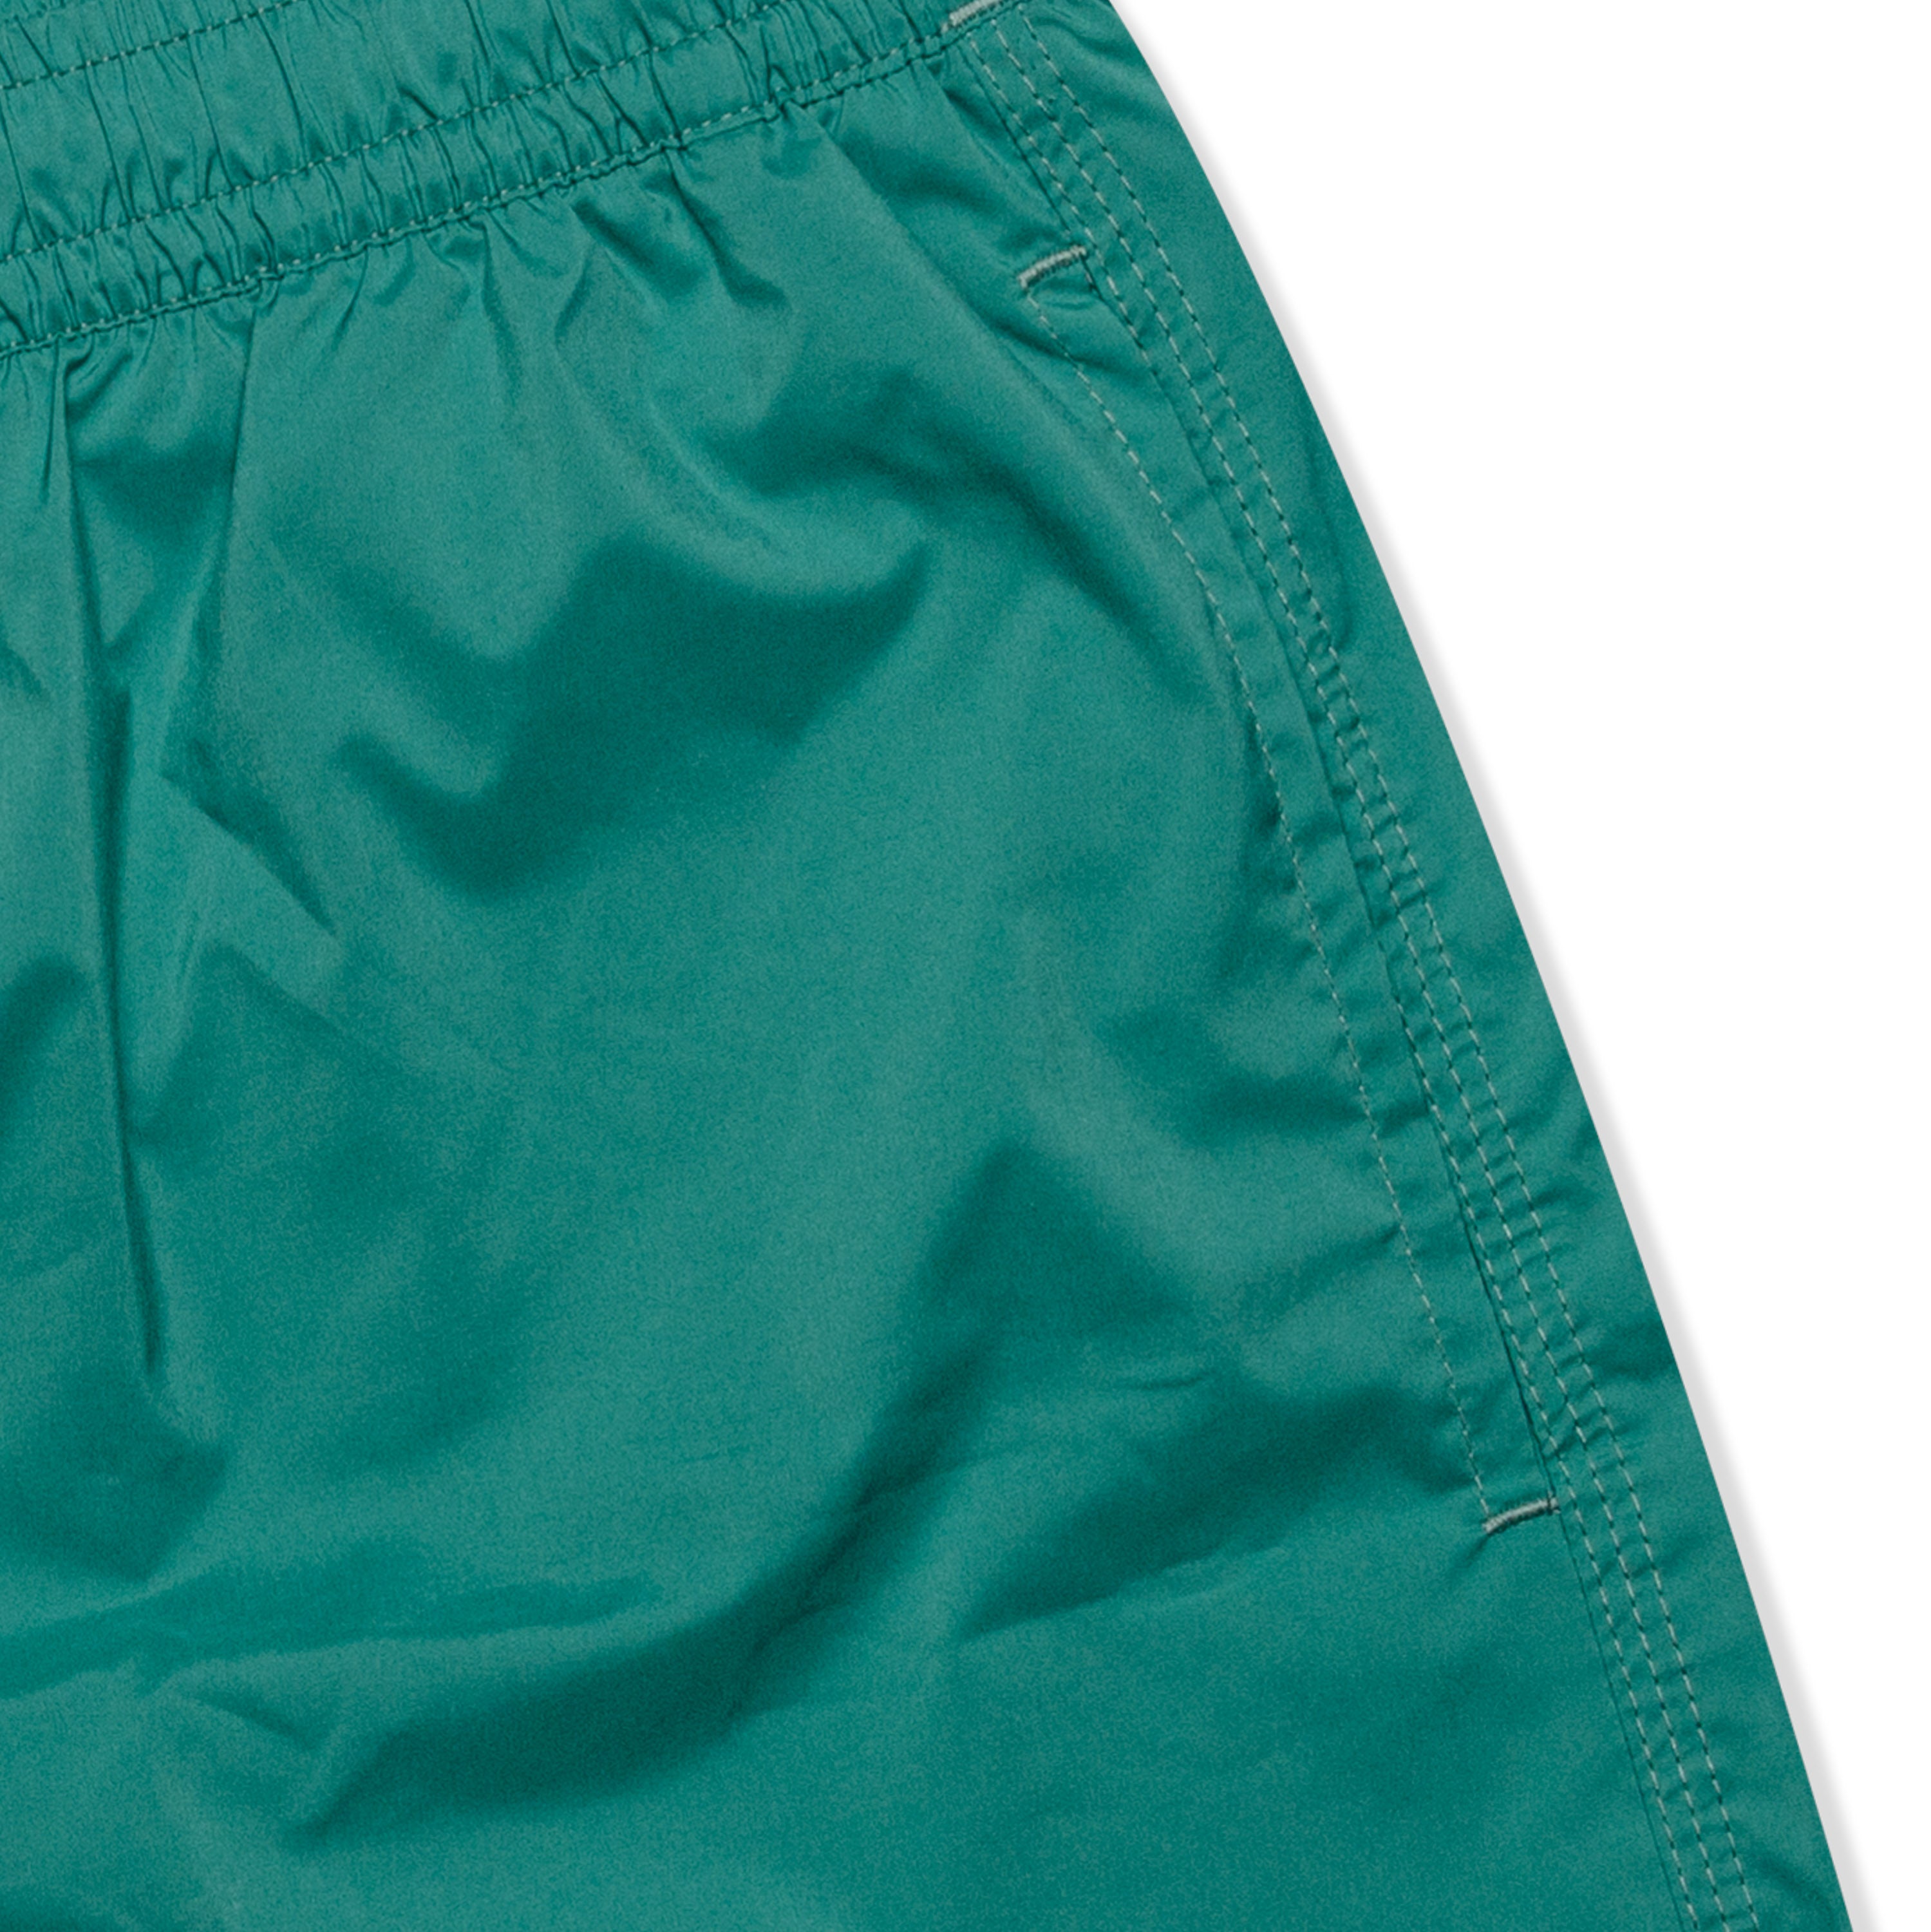 FEDELI Emerald Green Madeira Airstop Swim Shorts Trunks NEW Size 3XL FEDELI